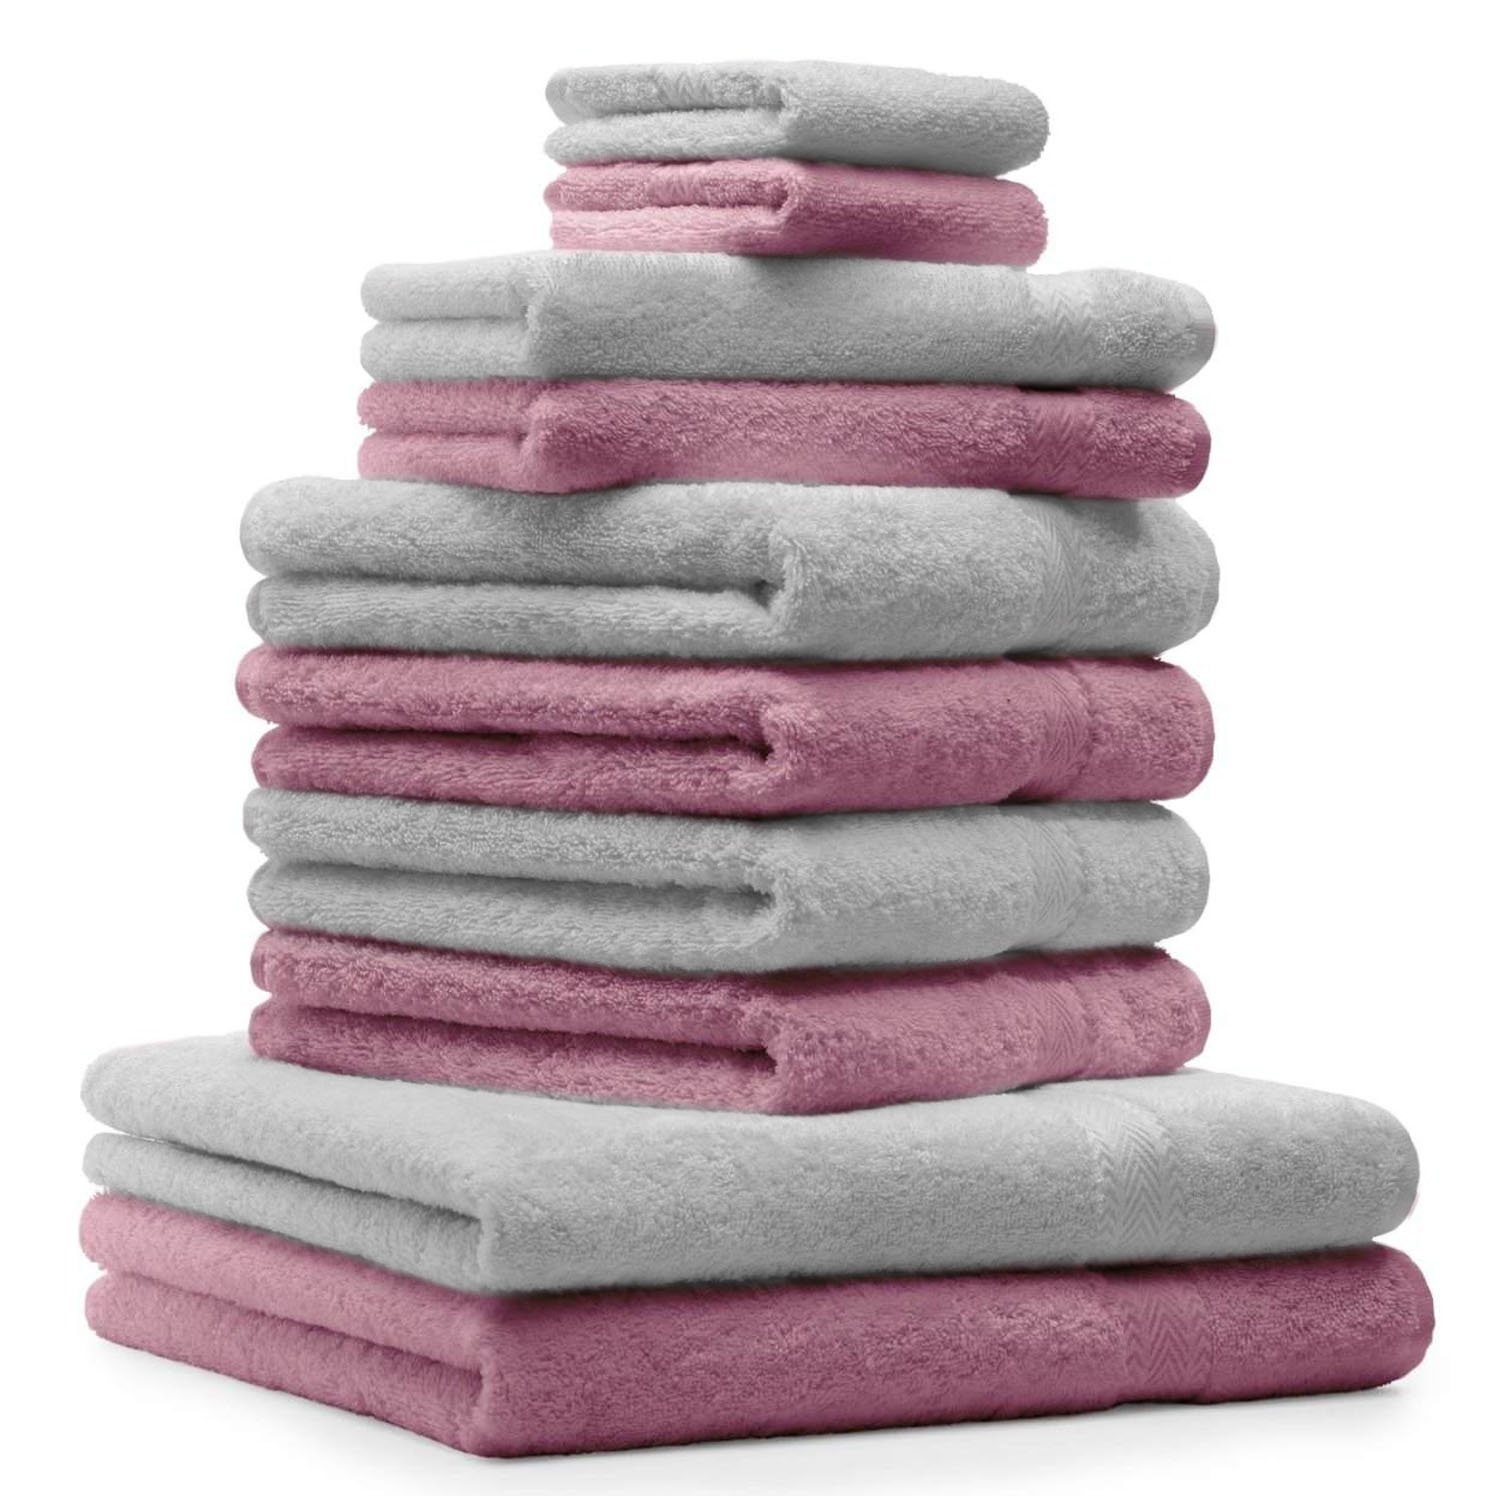 Betz Handtuch Set 10-TLG. Handtuch-Set Premium Farbe Silbergrau & Altrosa, 100% Baumwolle, (10-tlg)